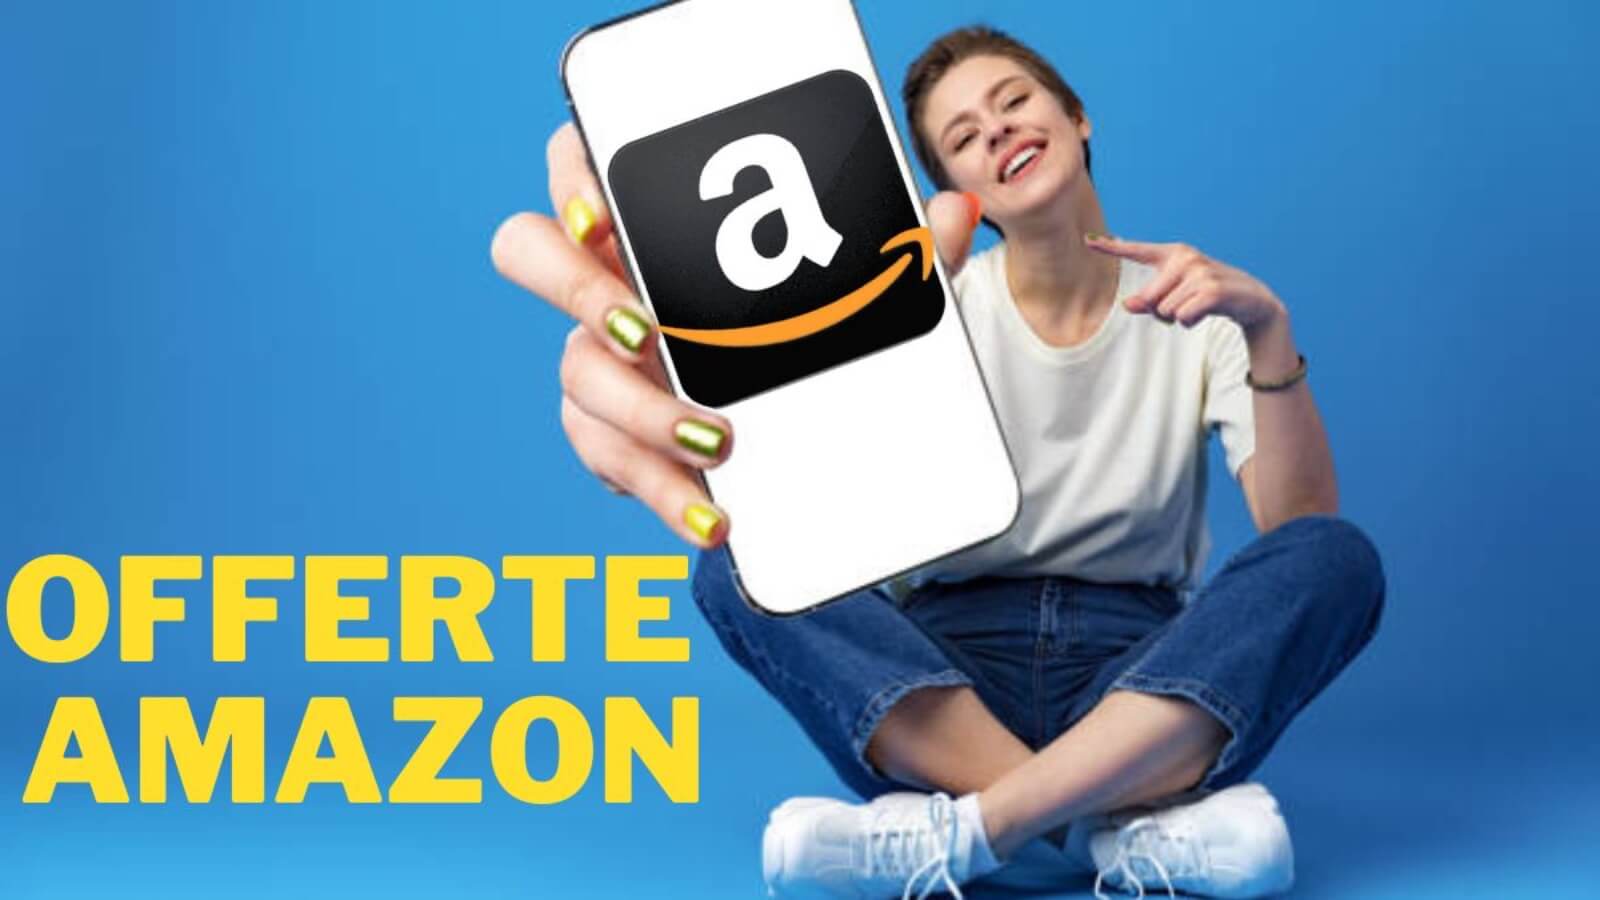 Amazon è impazzita, offerte al 70% con telefoni quasi gratis